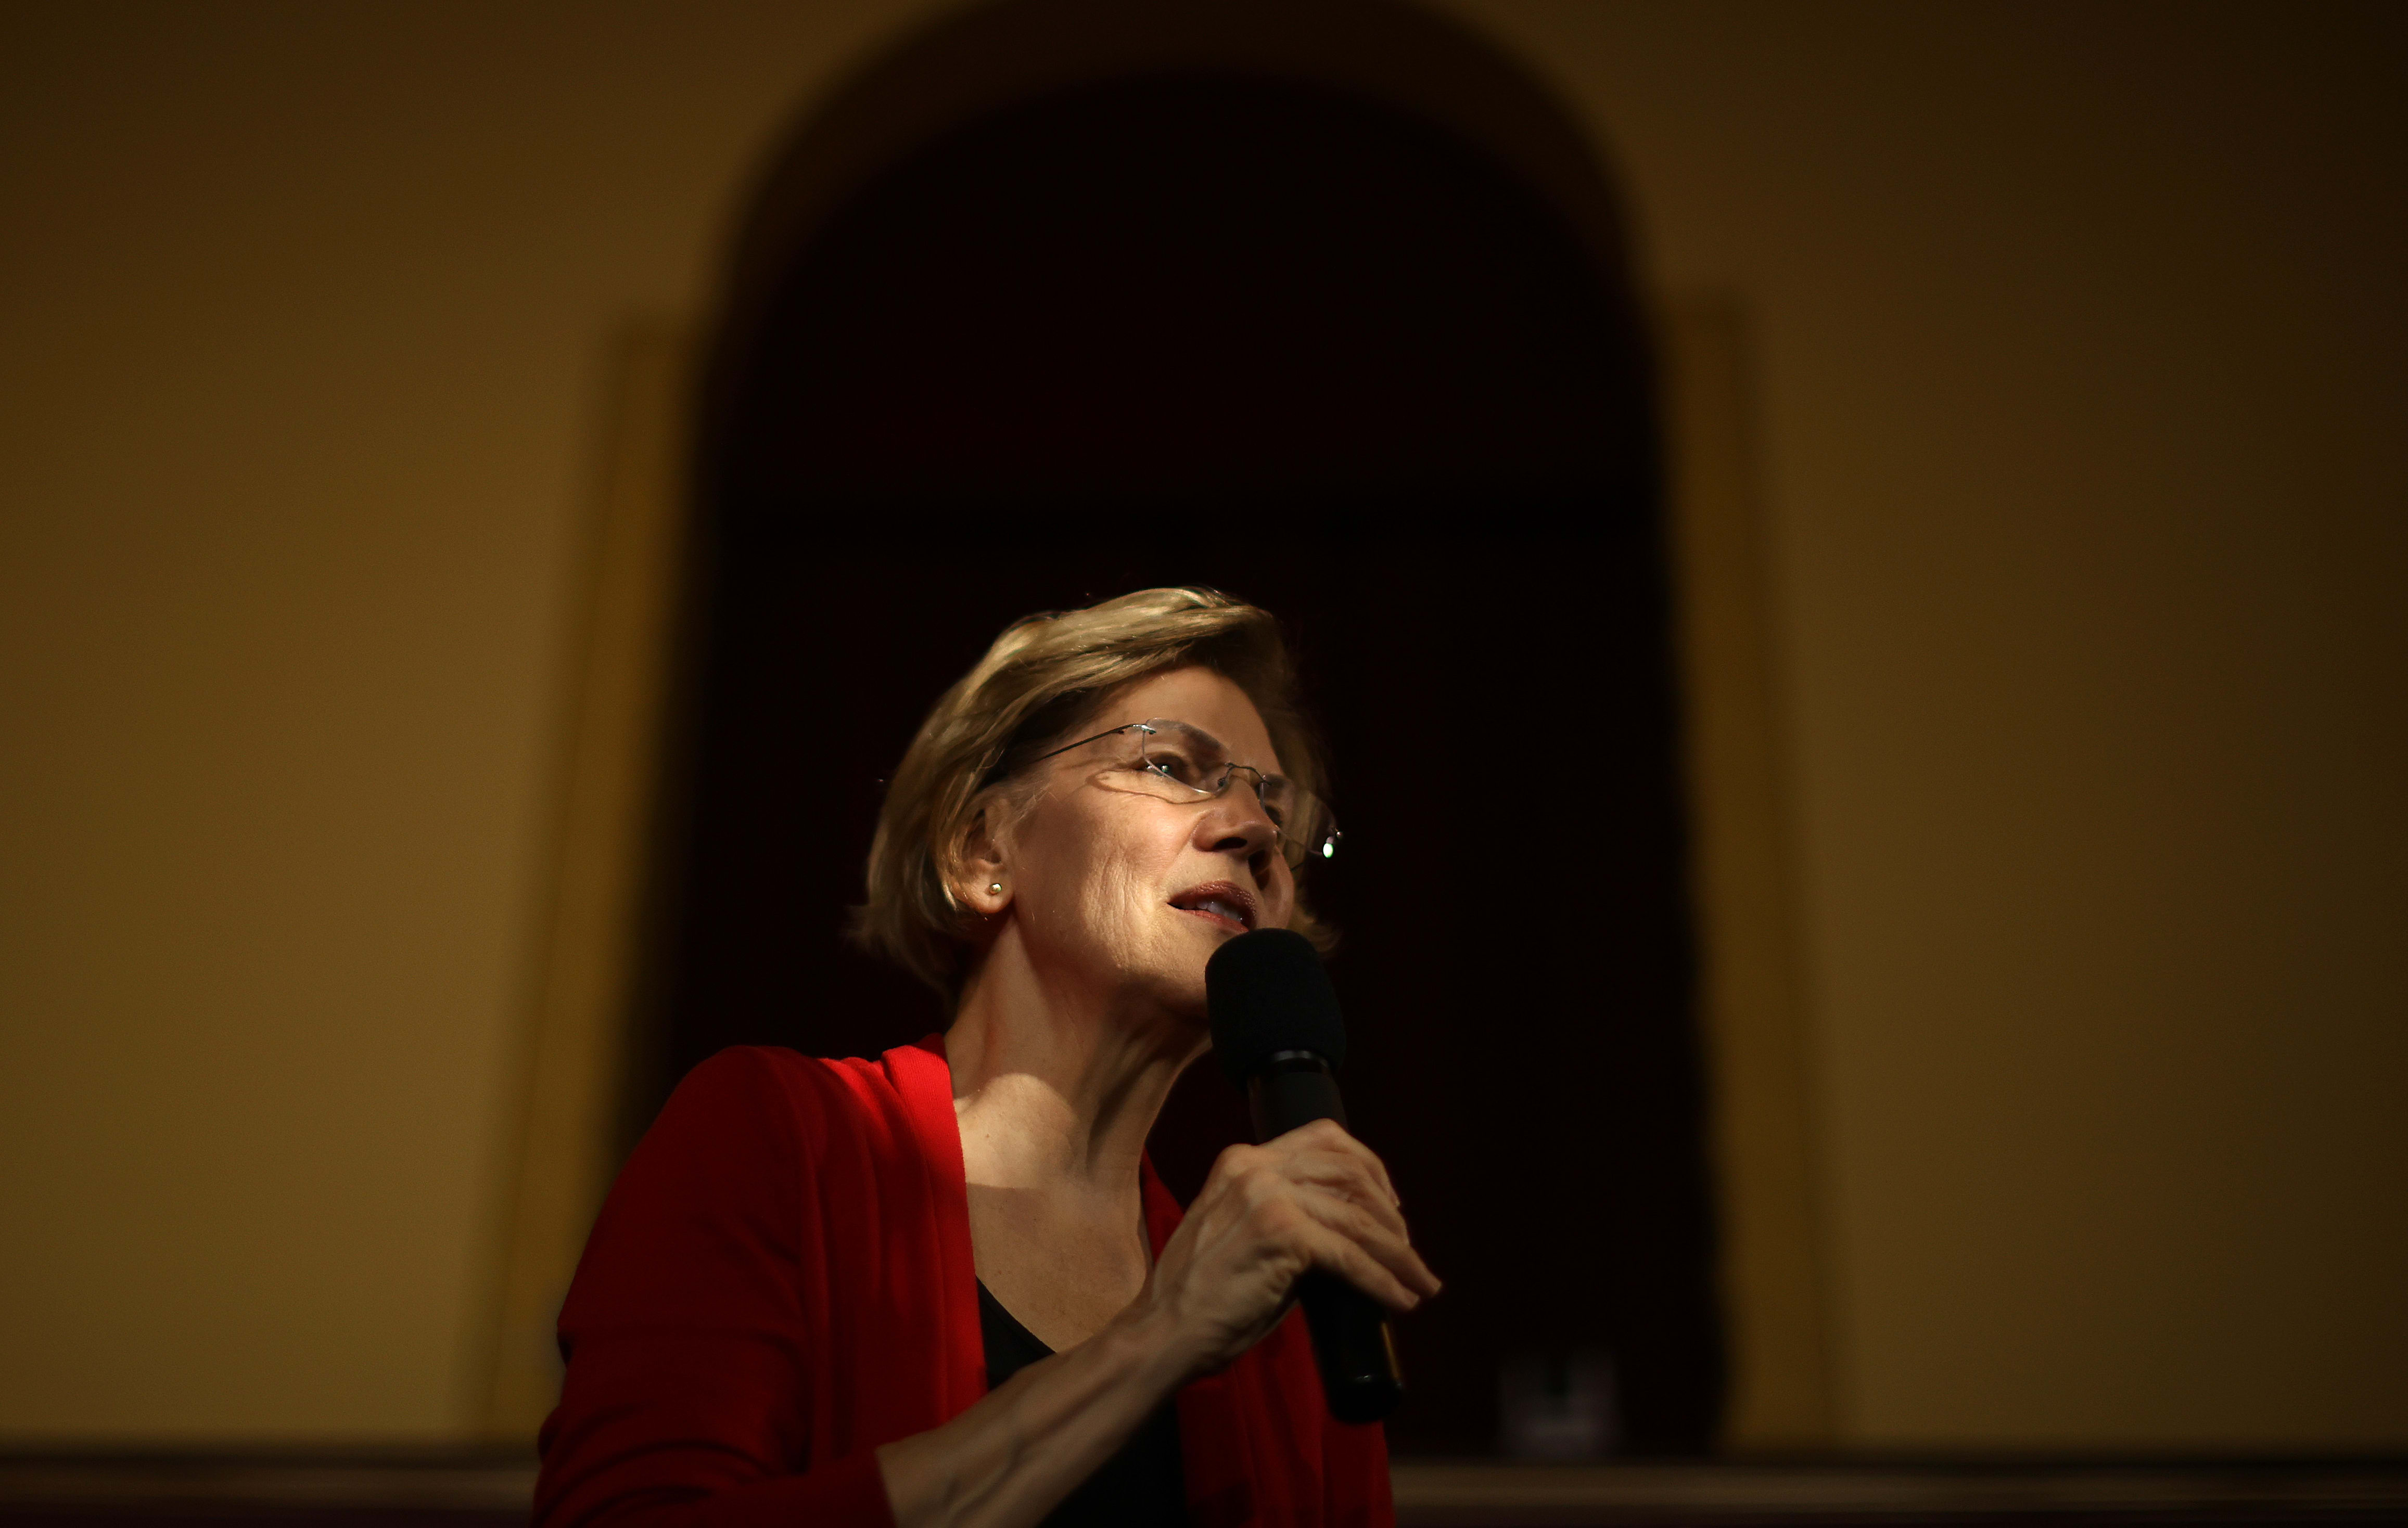 Senator Elizabeth Warren speaks during a campaign event at Iowa State University's Memorial Union February 02, 2020 in Ames, Iowa.